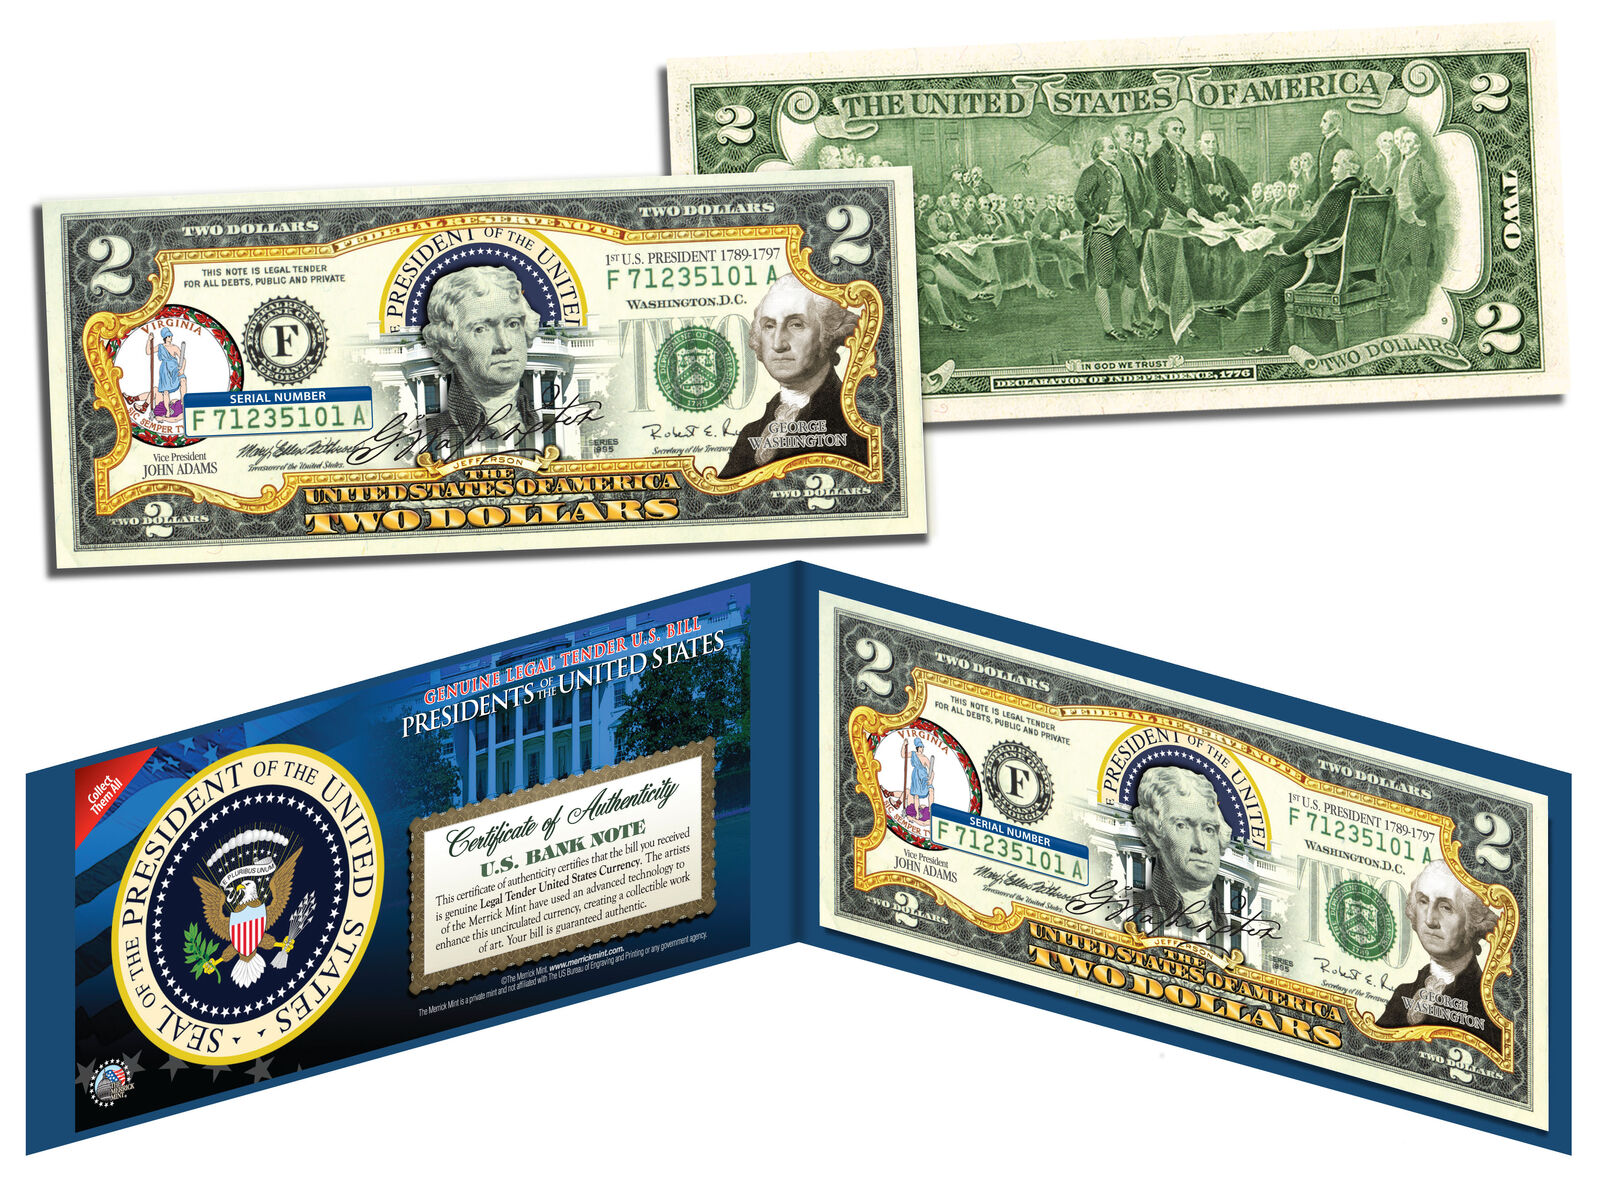 GEORGE WASHINGTON * 1st U.S. President * Colorized $2 Bill Genuine Legal Tender